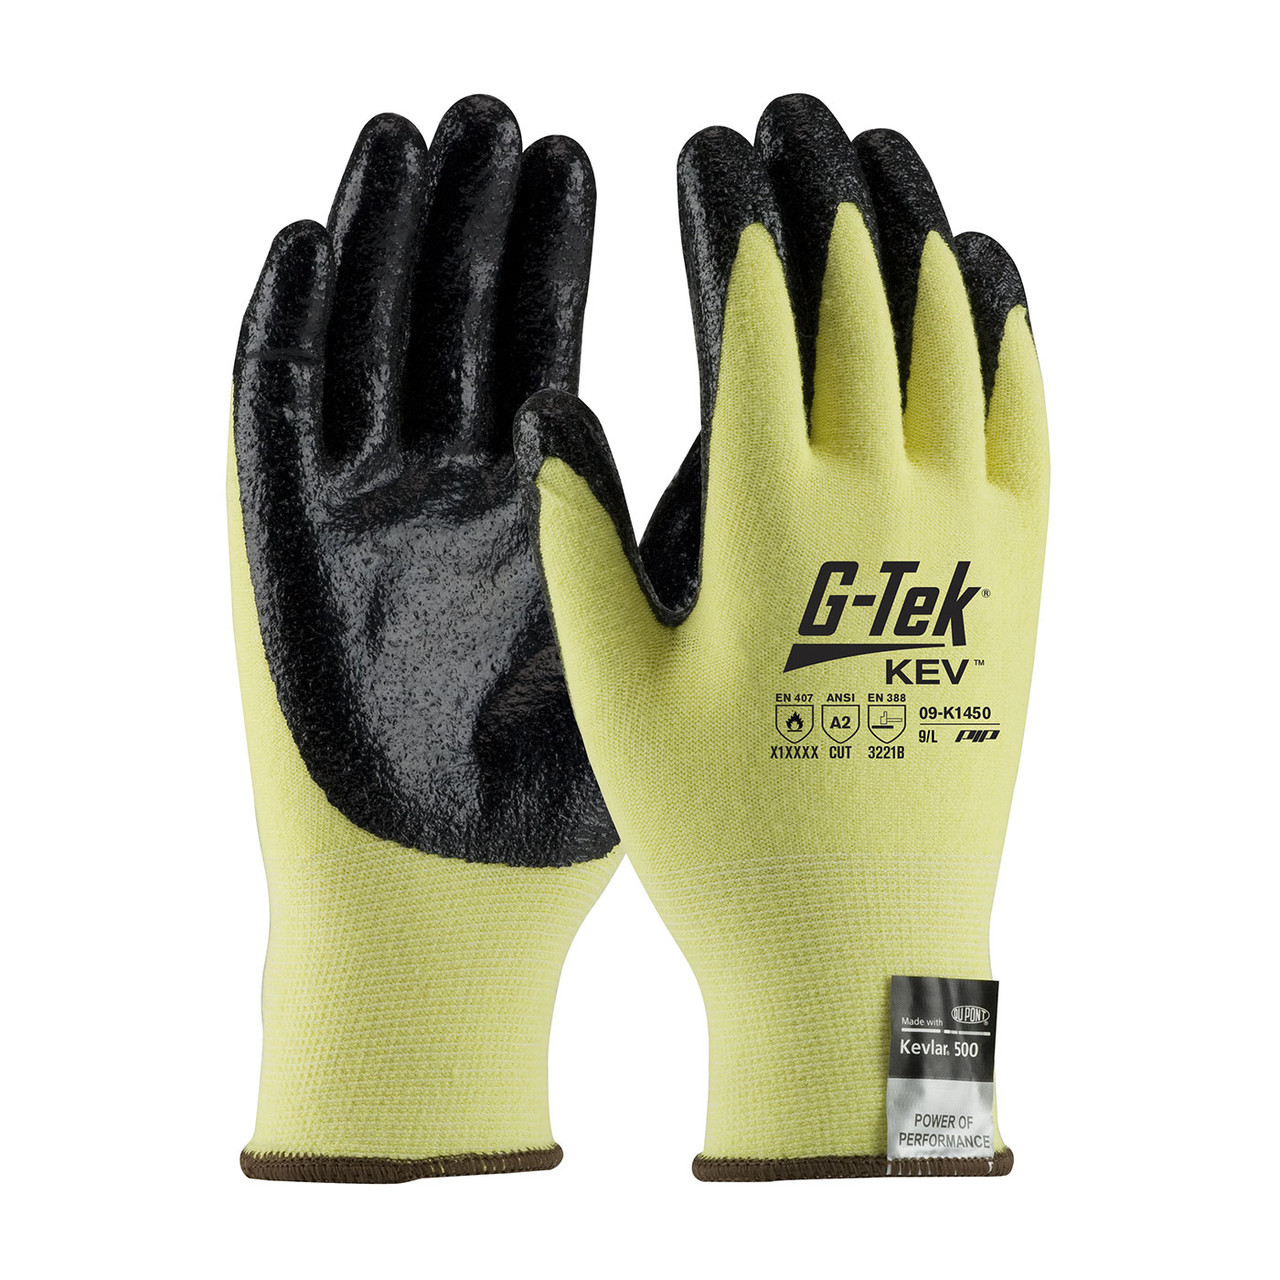 G-Tek KEV Seamless Knit DuPont Kevlar / Elastane Glove with Polyurethane  Coated Flat Grip on Palm & Fingers, Medium, 12 Pairs